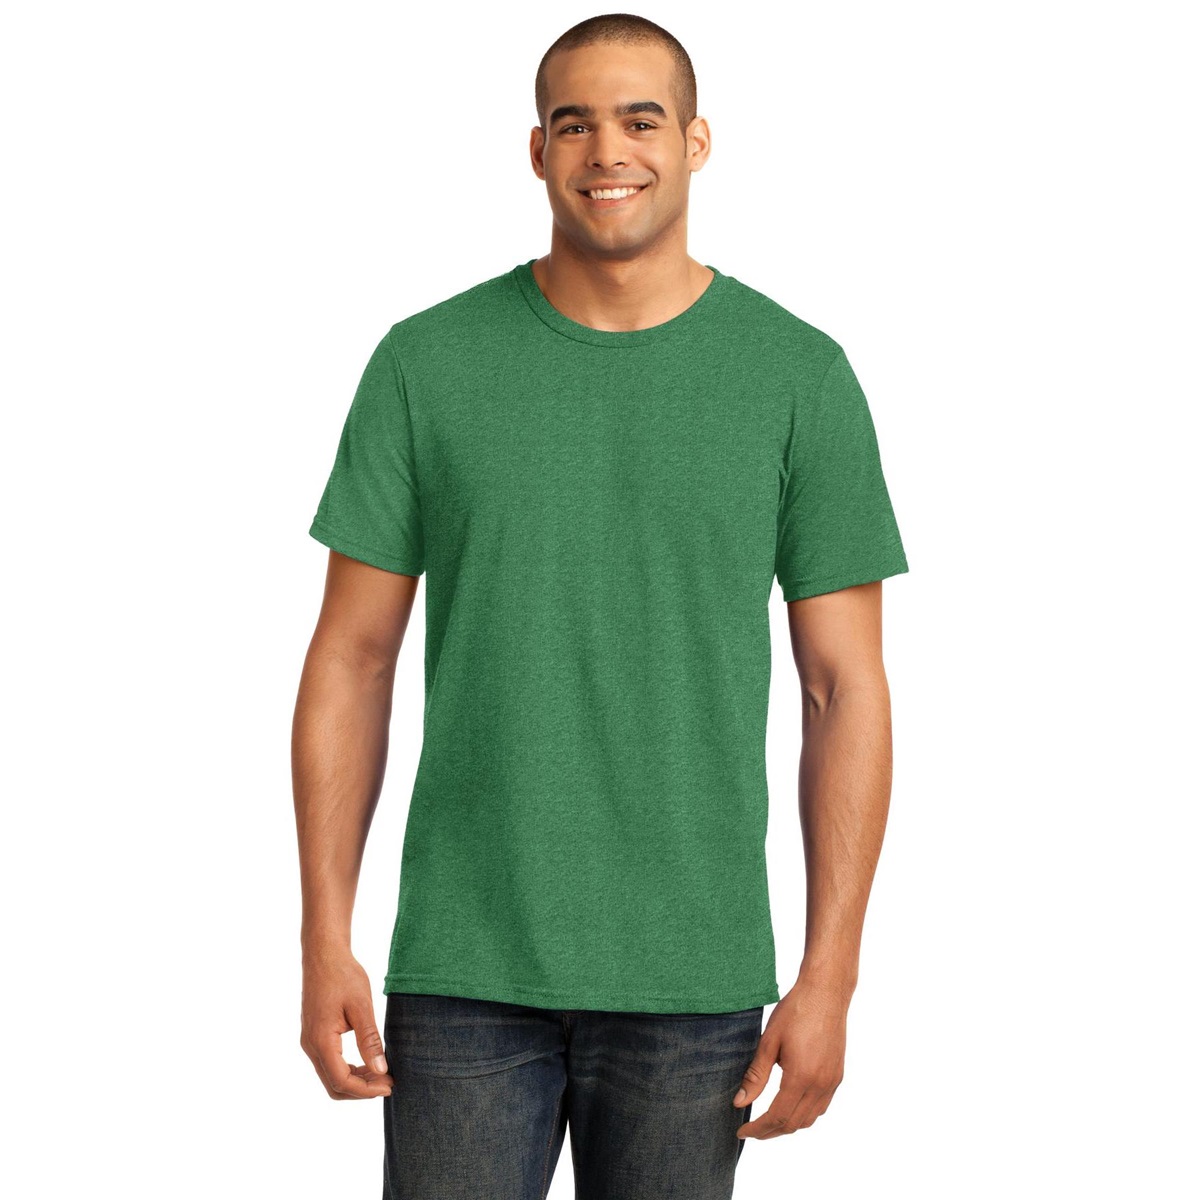 Anvil 980 Ring Spun Cotton T-Shirt - Heather Green | FullSource.com